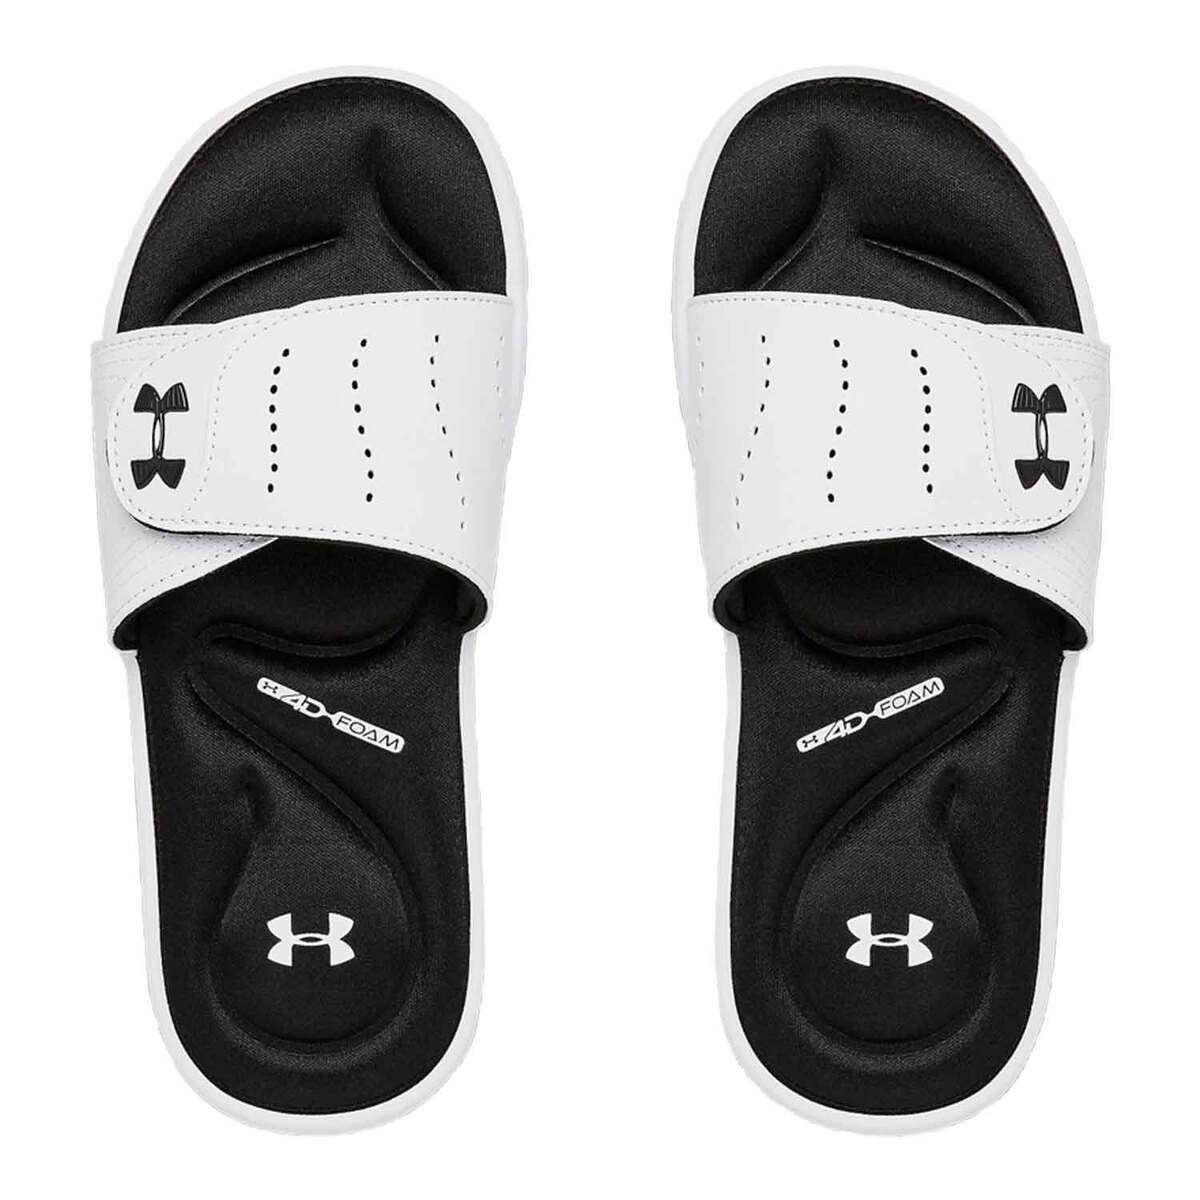 Under Armour Women's Ignite IX Slide Open Toe Sandals | Sportsman's ...